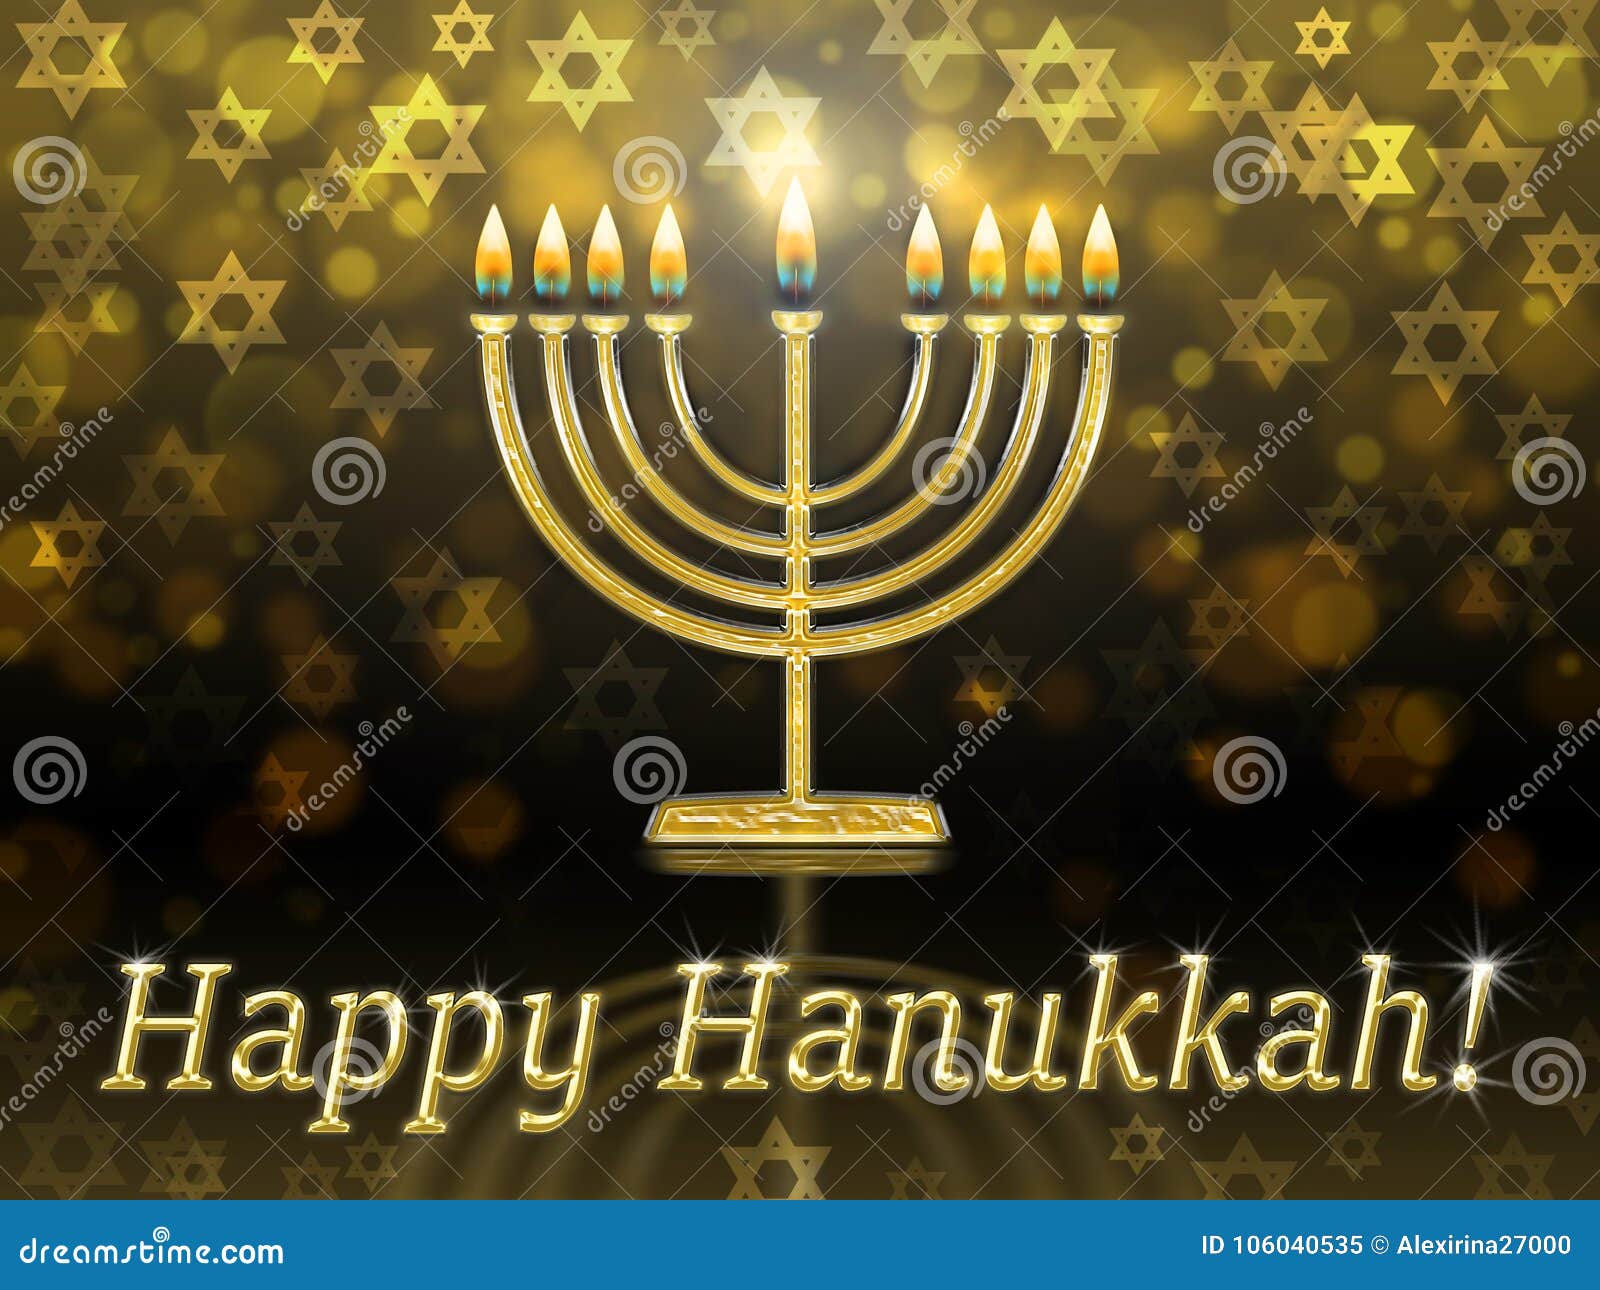 Greeting Card with Inscription - Happy Hanukkah Stock Illustration ...